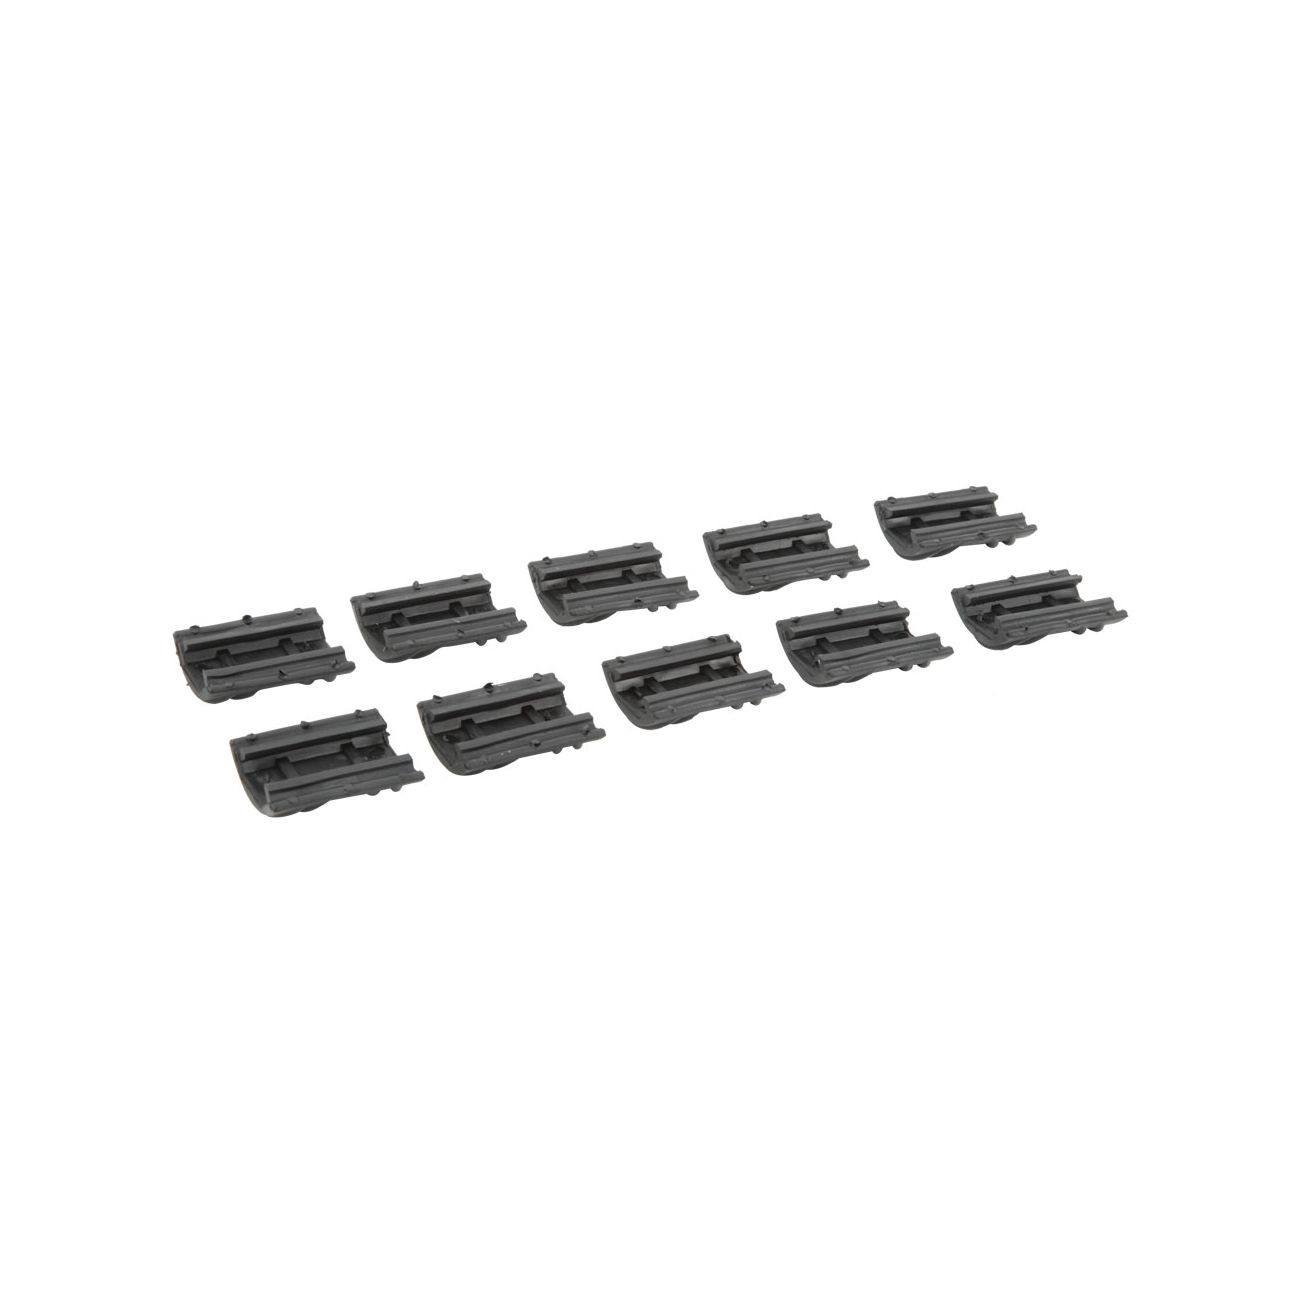 Element TD-Style Rubber Rail Covers kurz 10 Stck - schwarz Bild 1